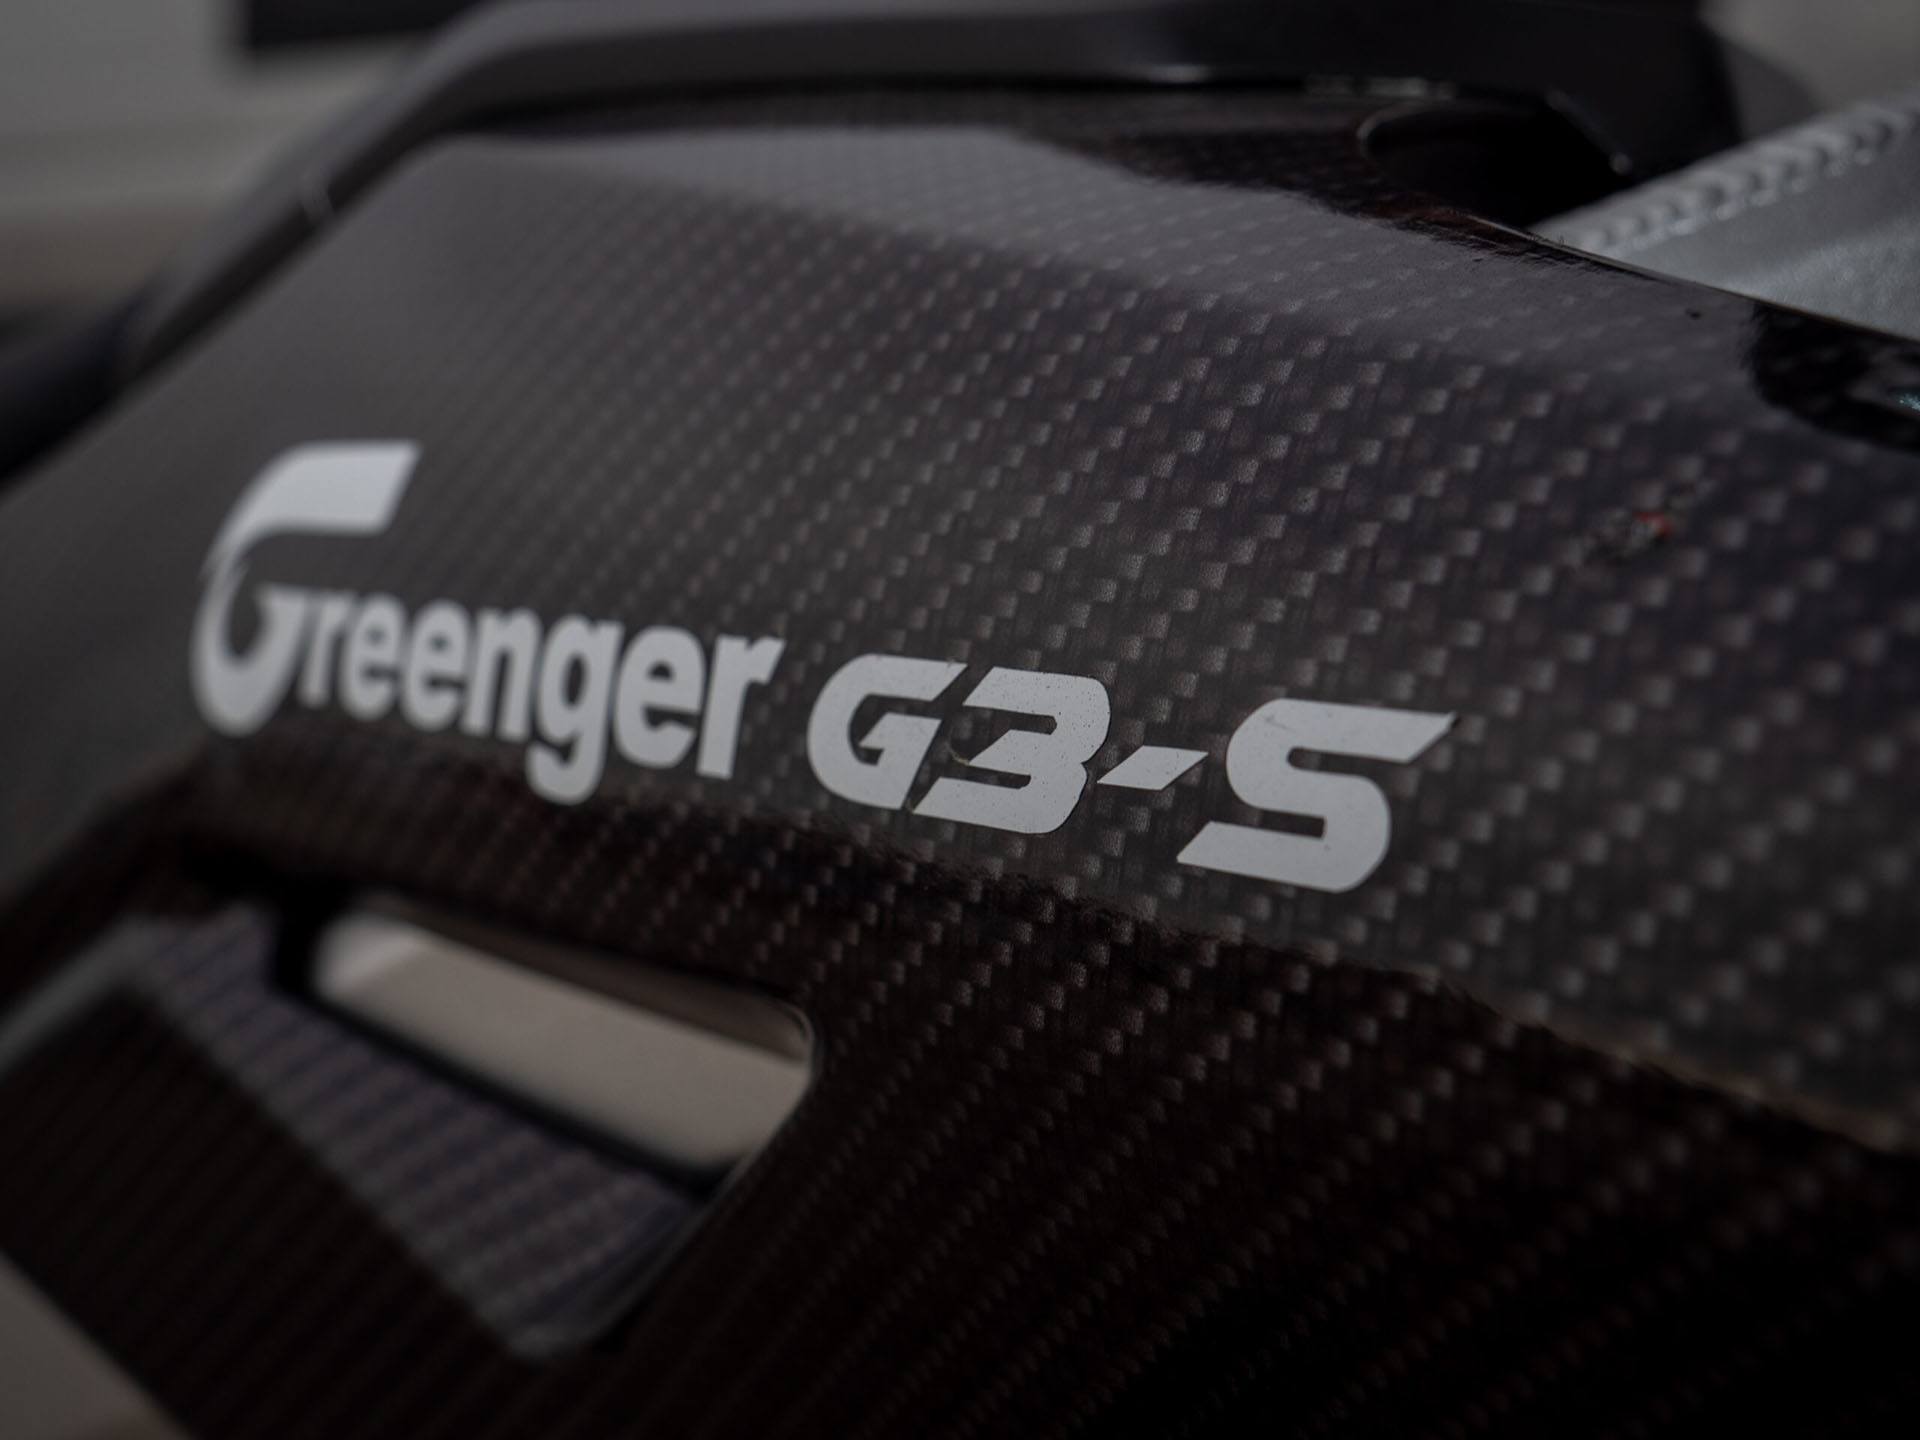 2023 Greenger Powersports G3S in Valparaiso, Indiana - Photo 4